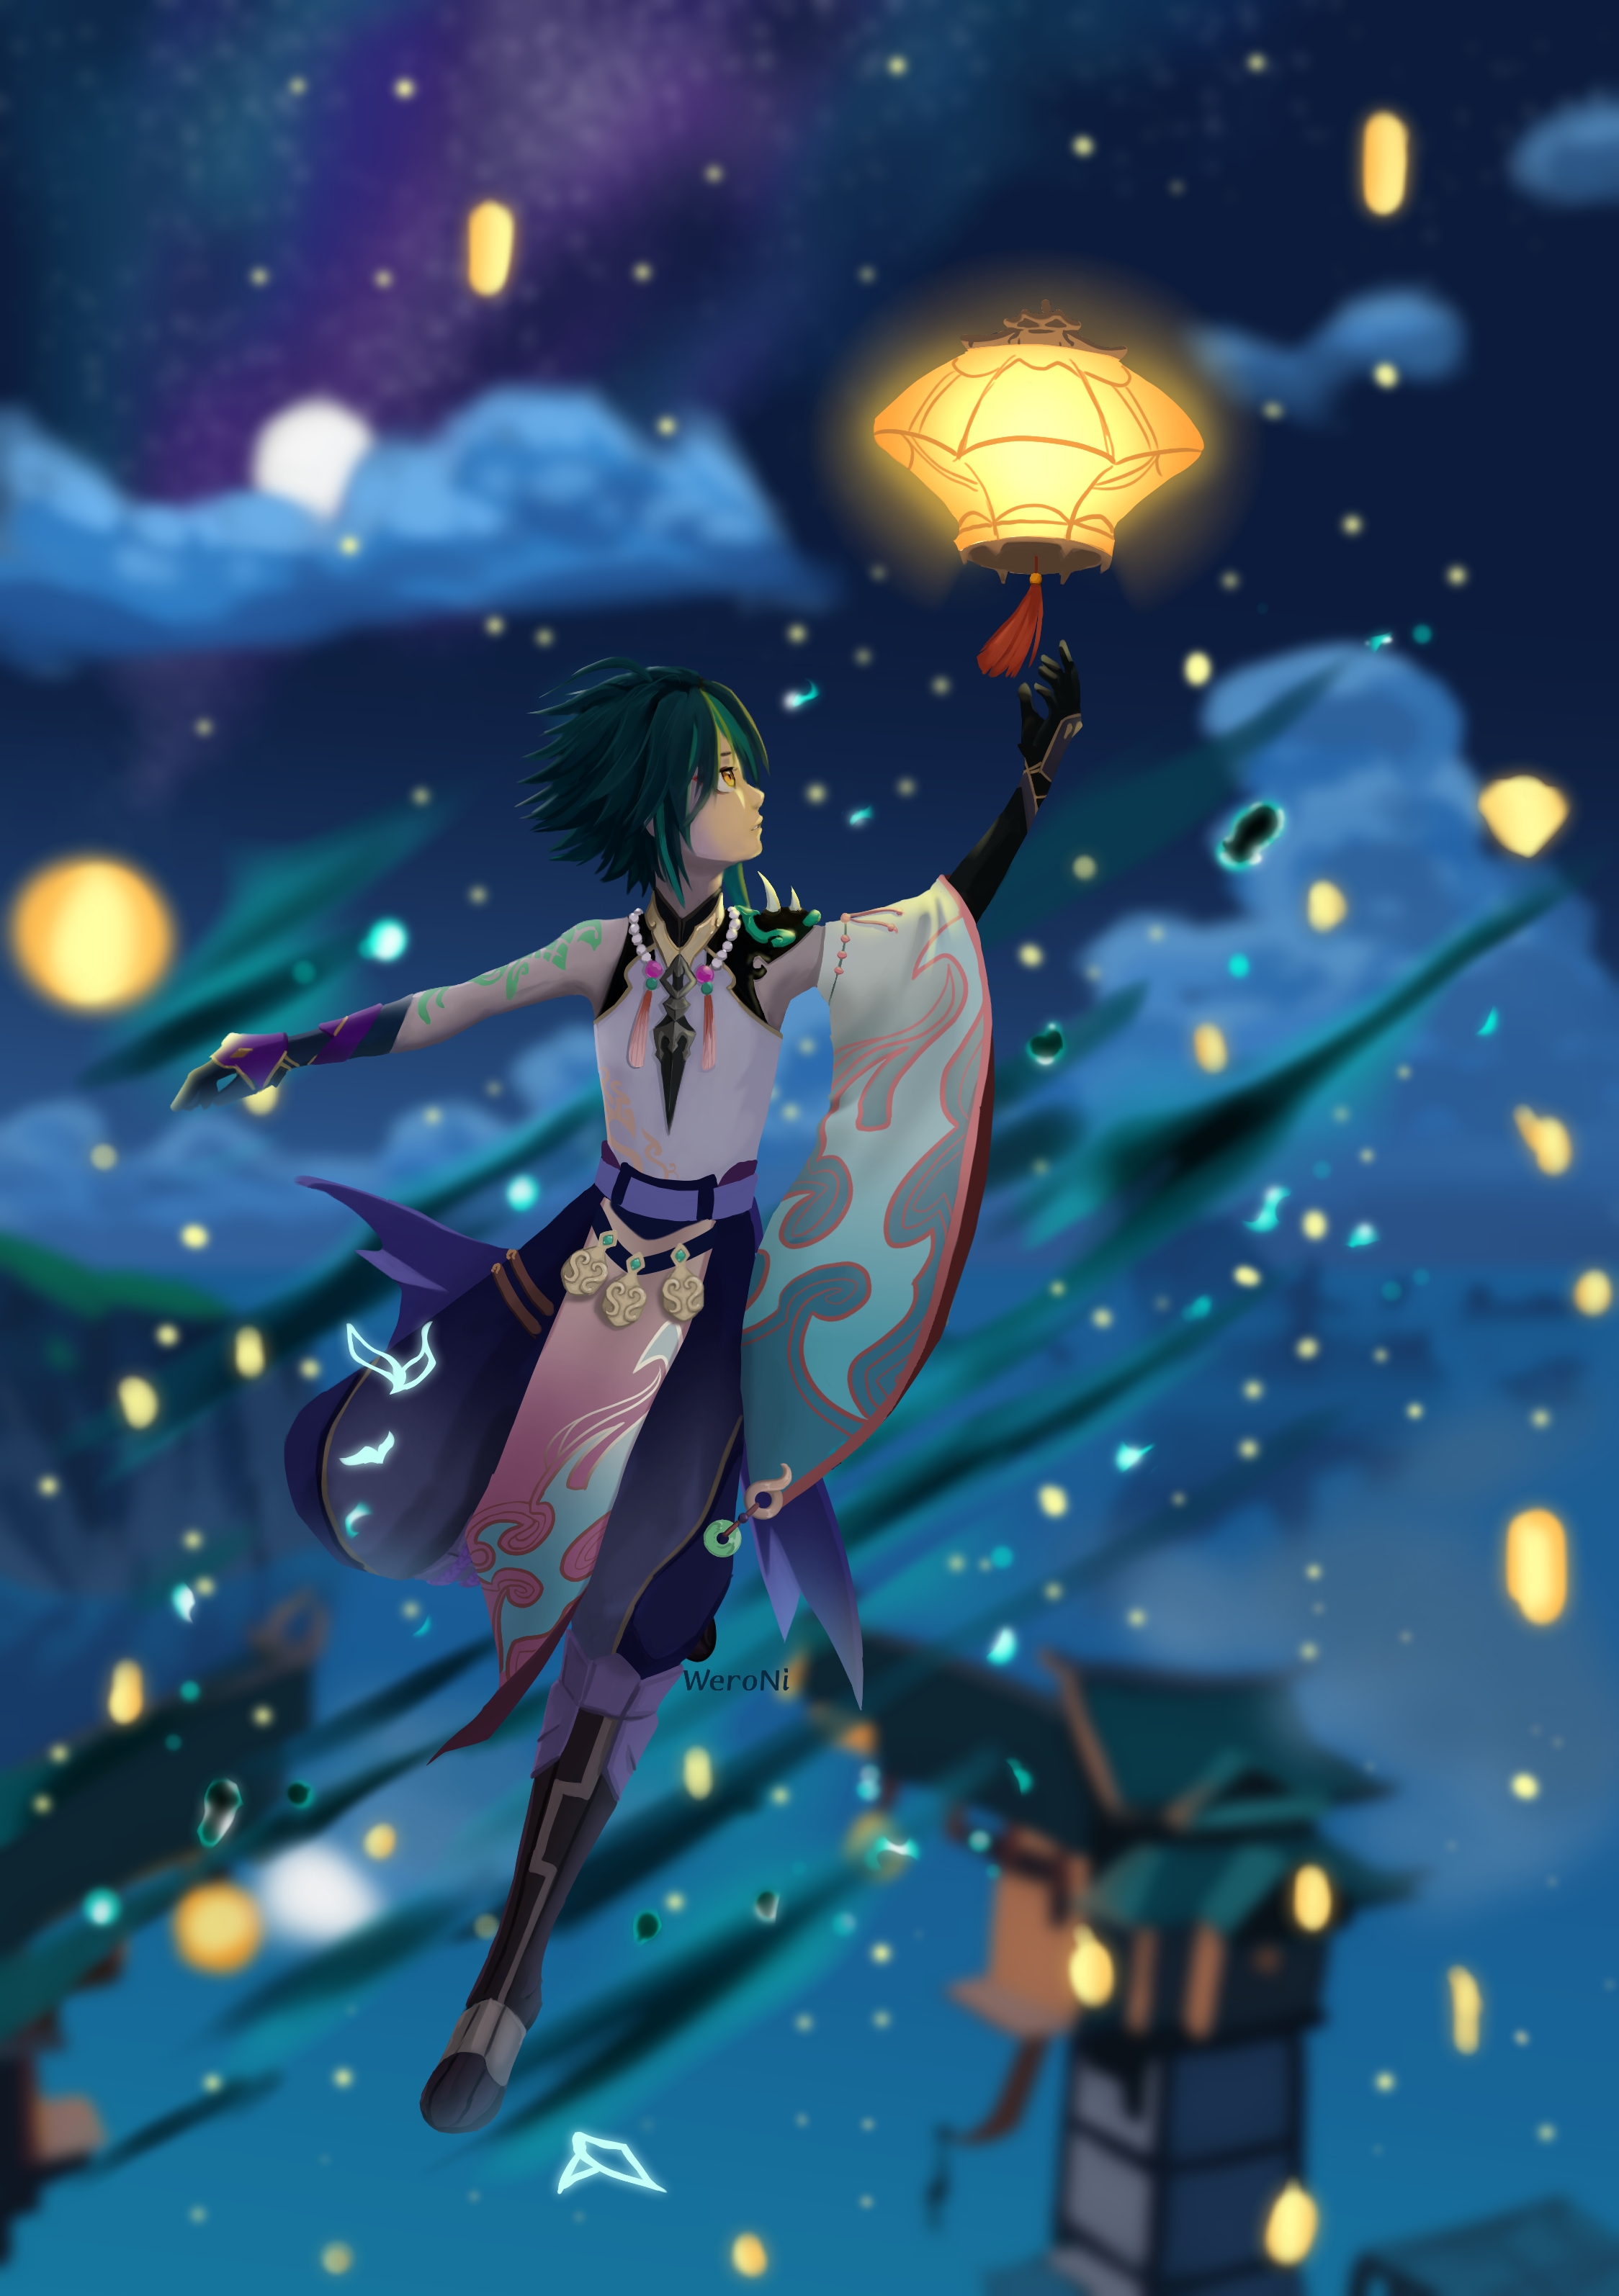 A Sea of Lights - Fly with Lanterns Genshin Impact | HoYoLAB